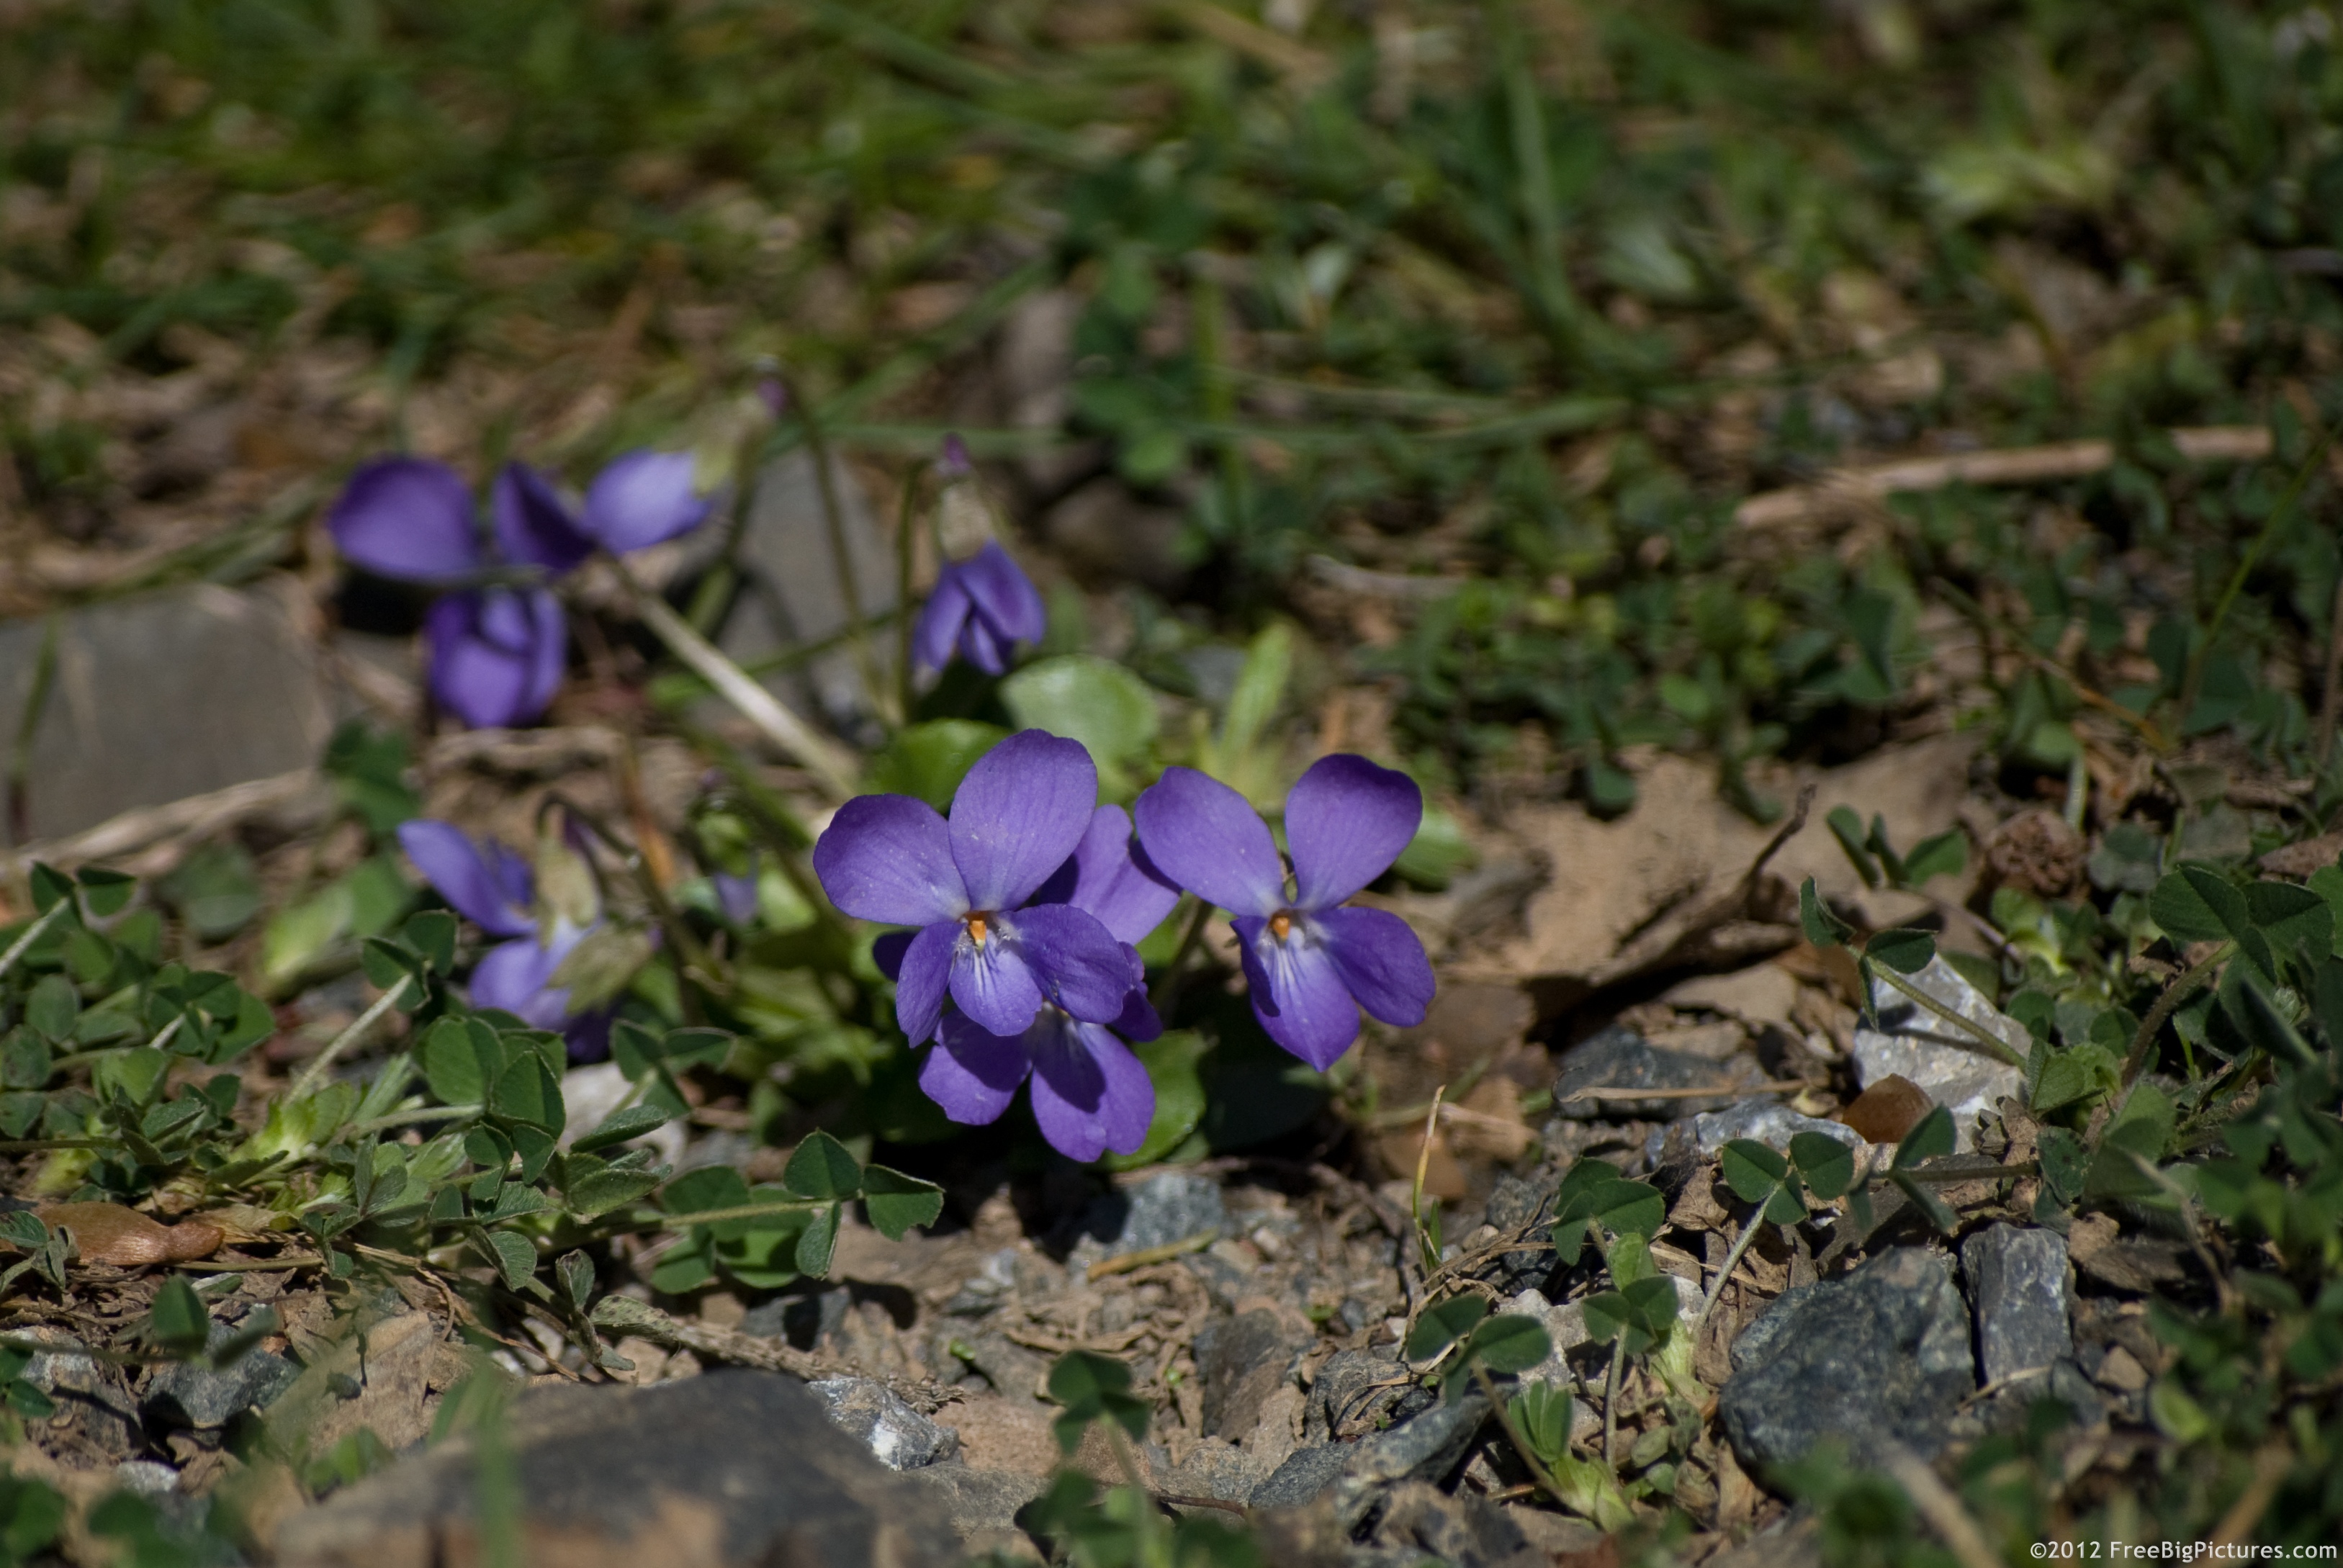 Viola Papilionacea – a violet-blue wildflower that blooms in spring